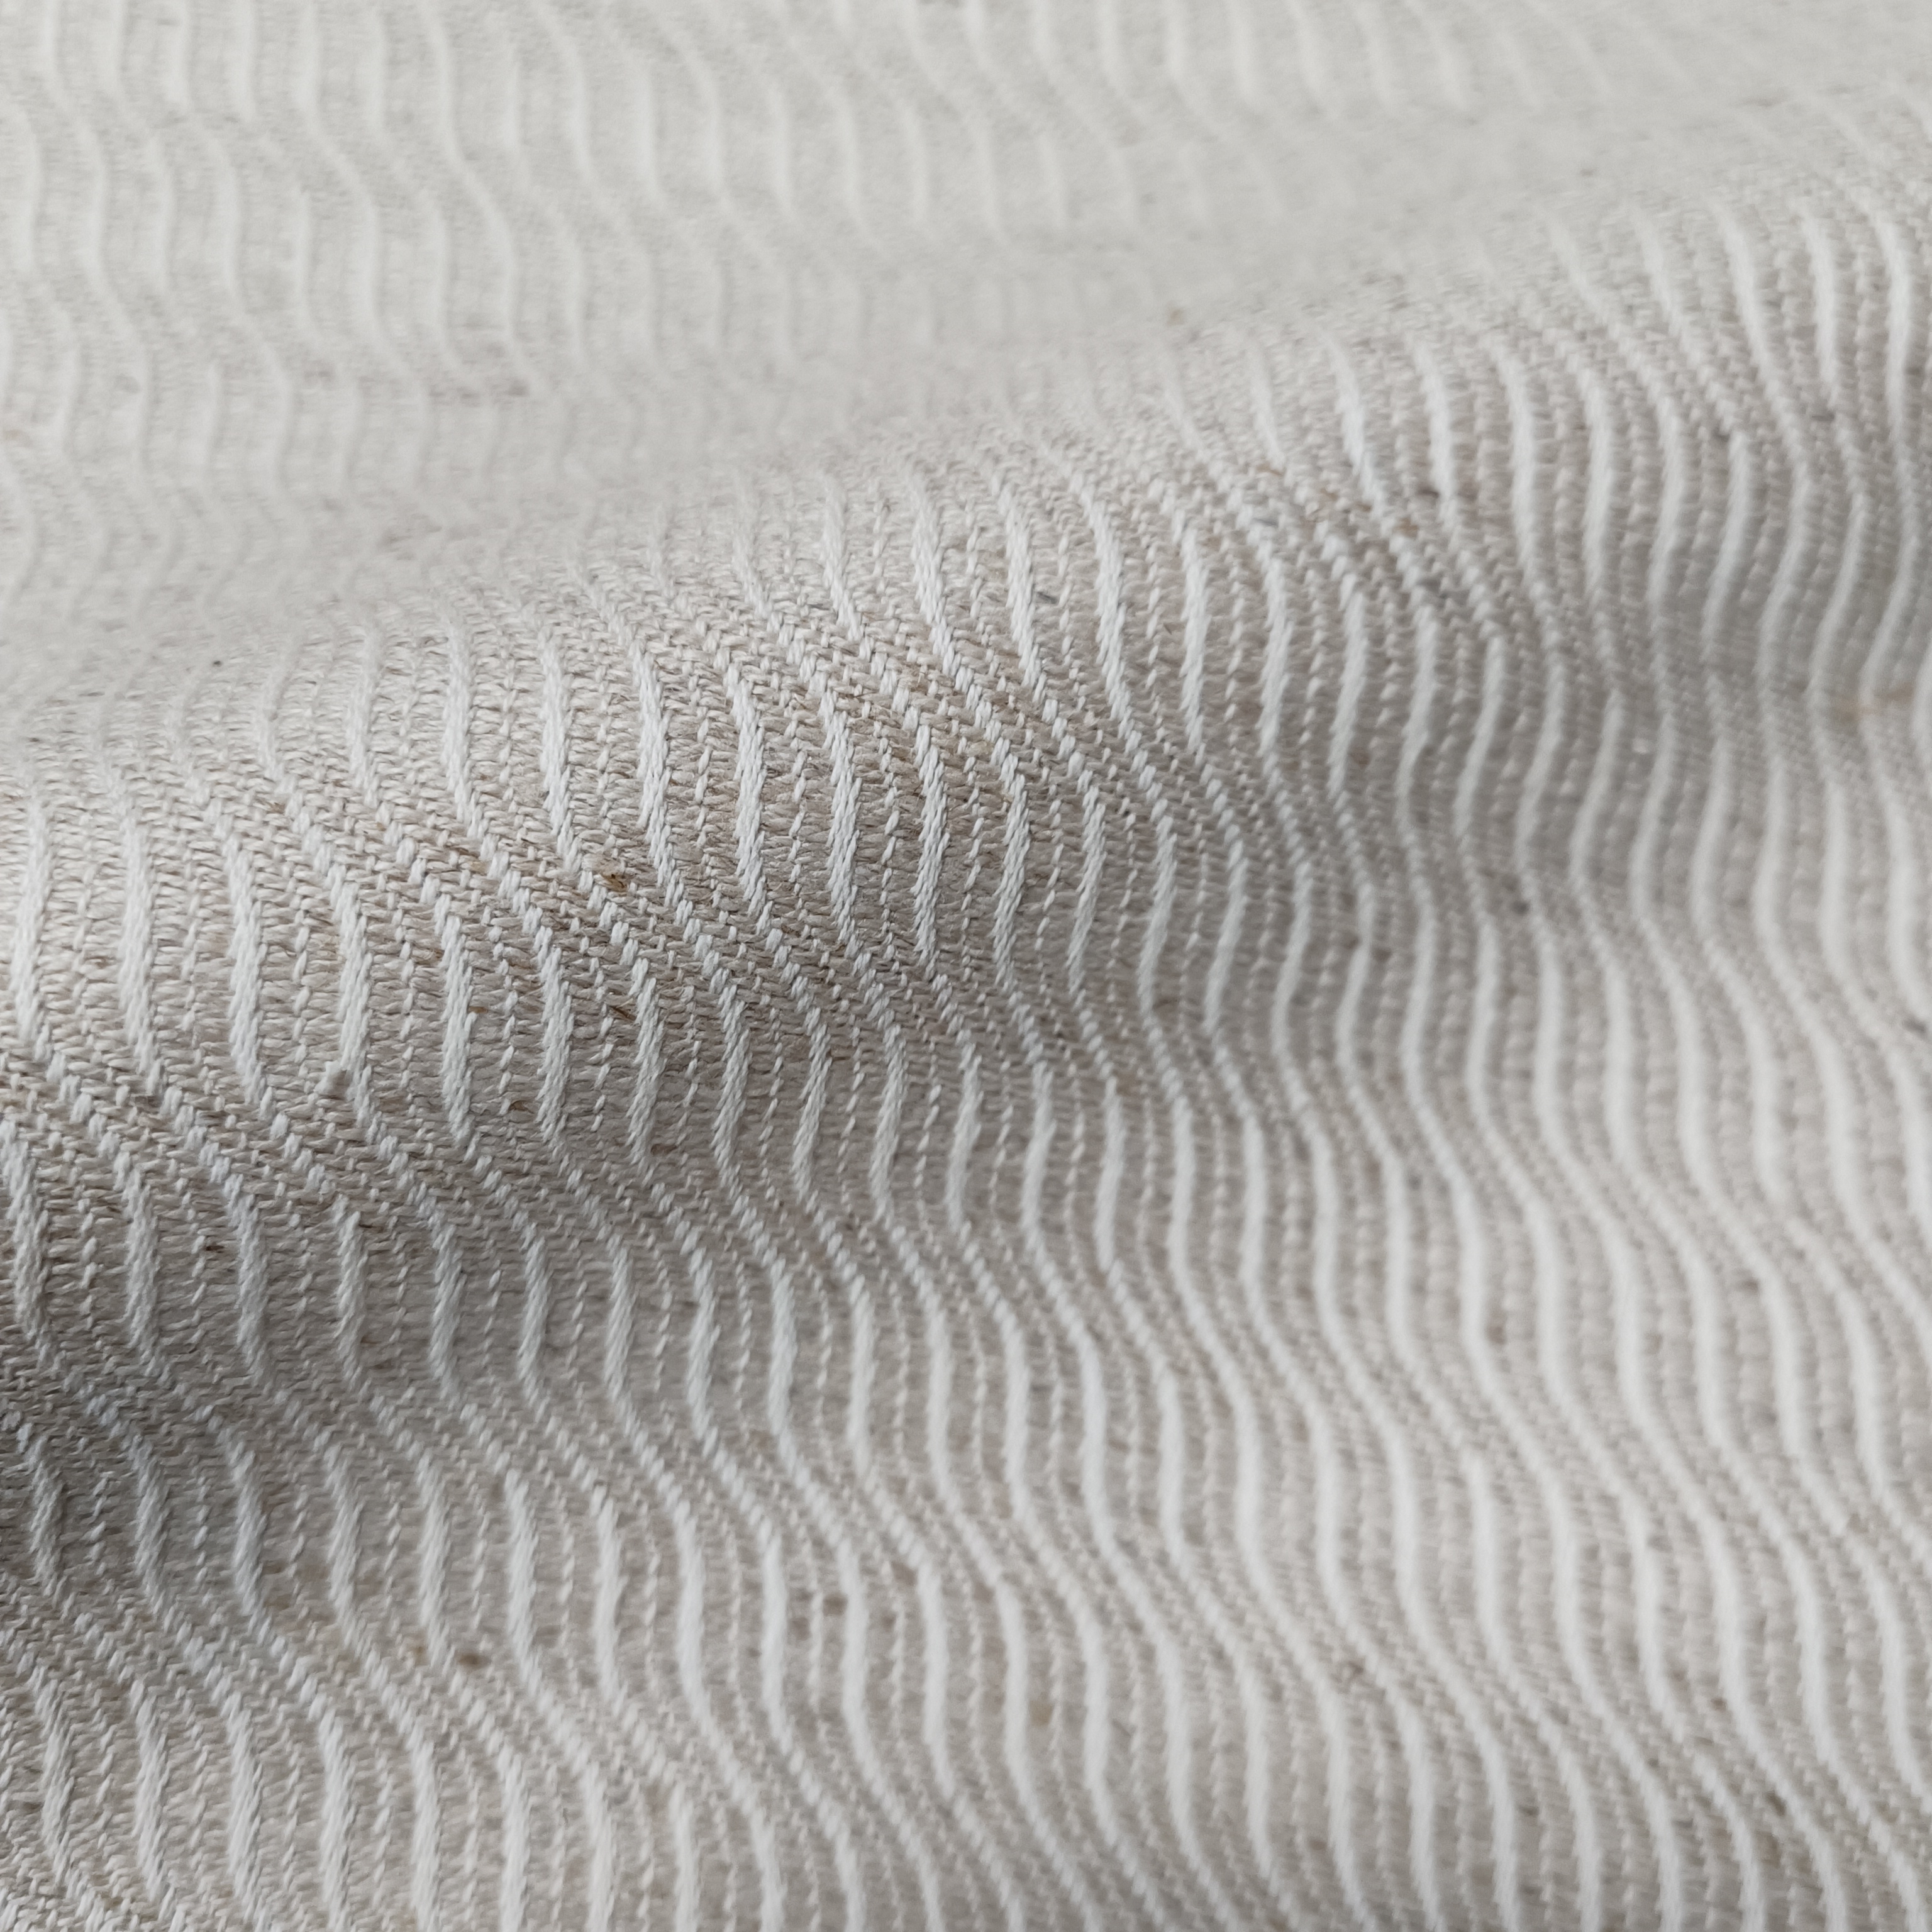 Cotton Linen Woven Fabric